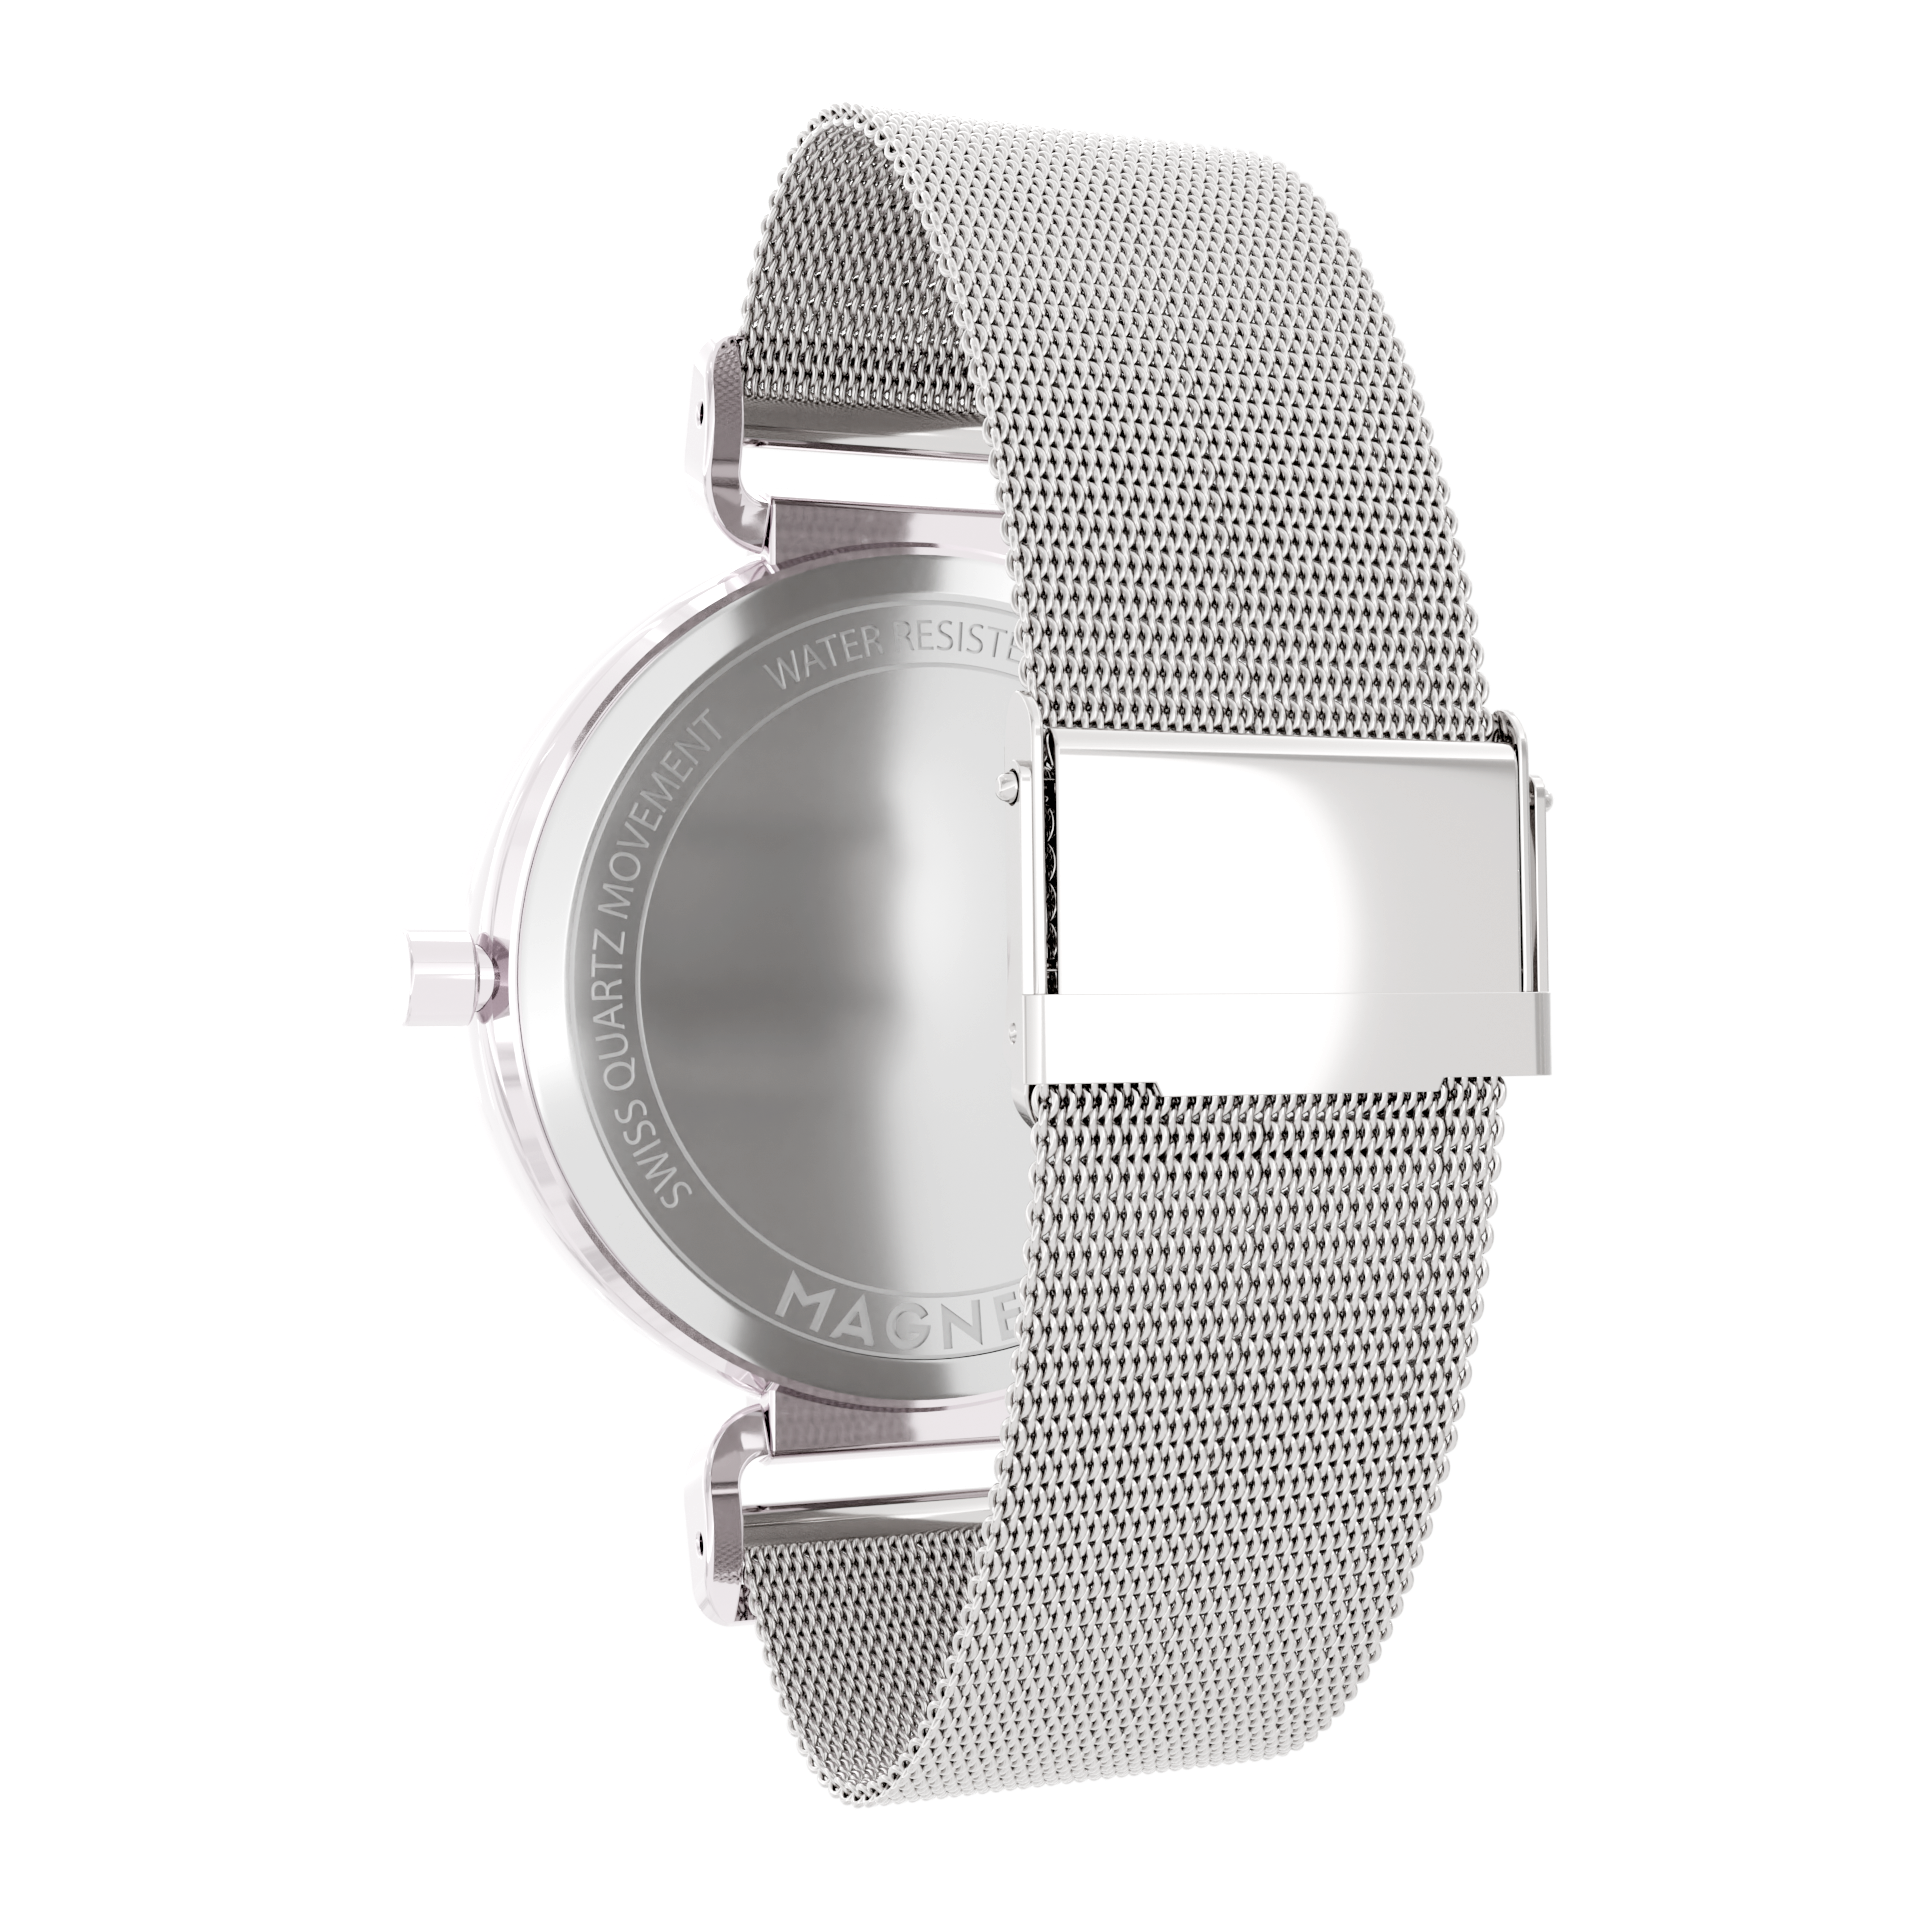    Magneto-Watch-Bella-Silver-Pearl-Maschenarmband-Sicherheitsverschluss-Silber-16mm-Side